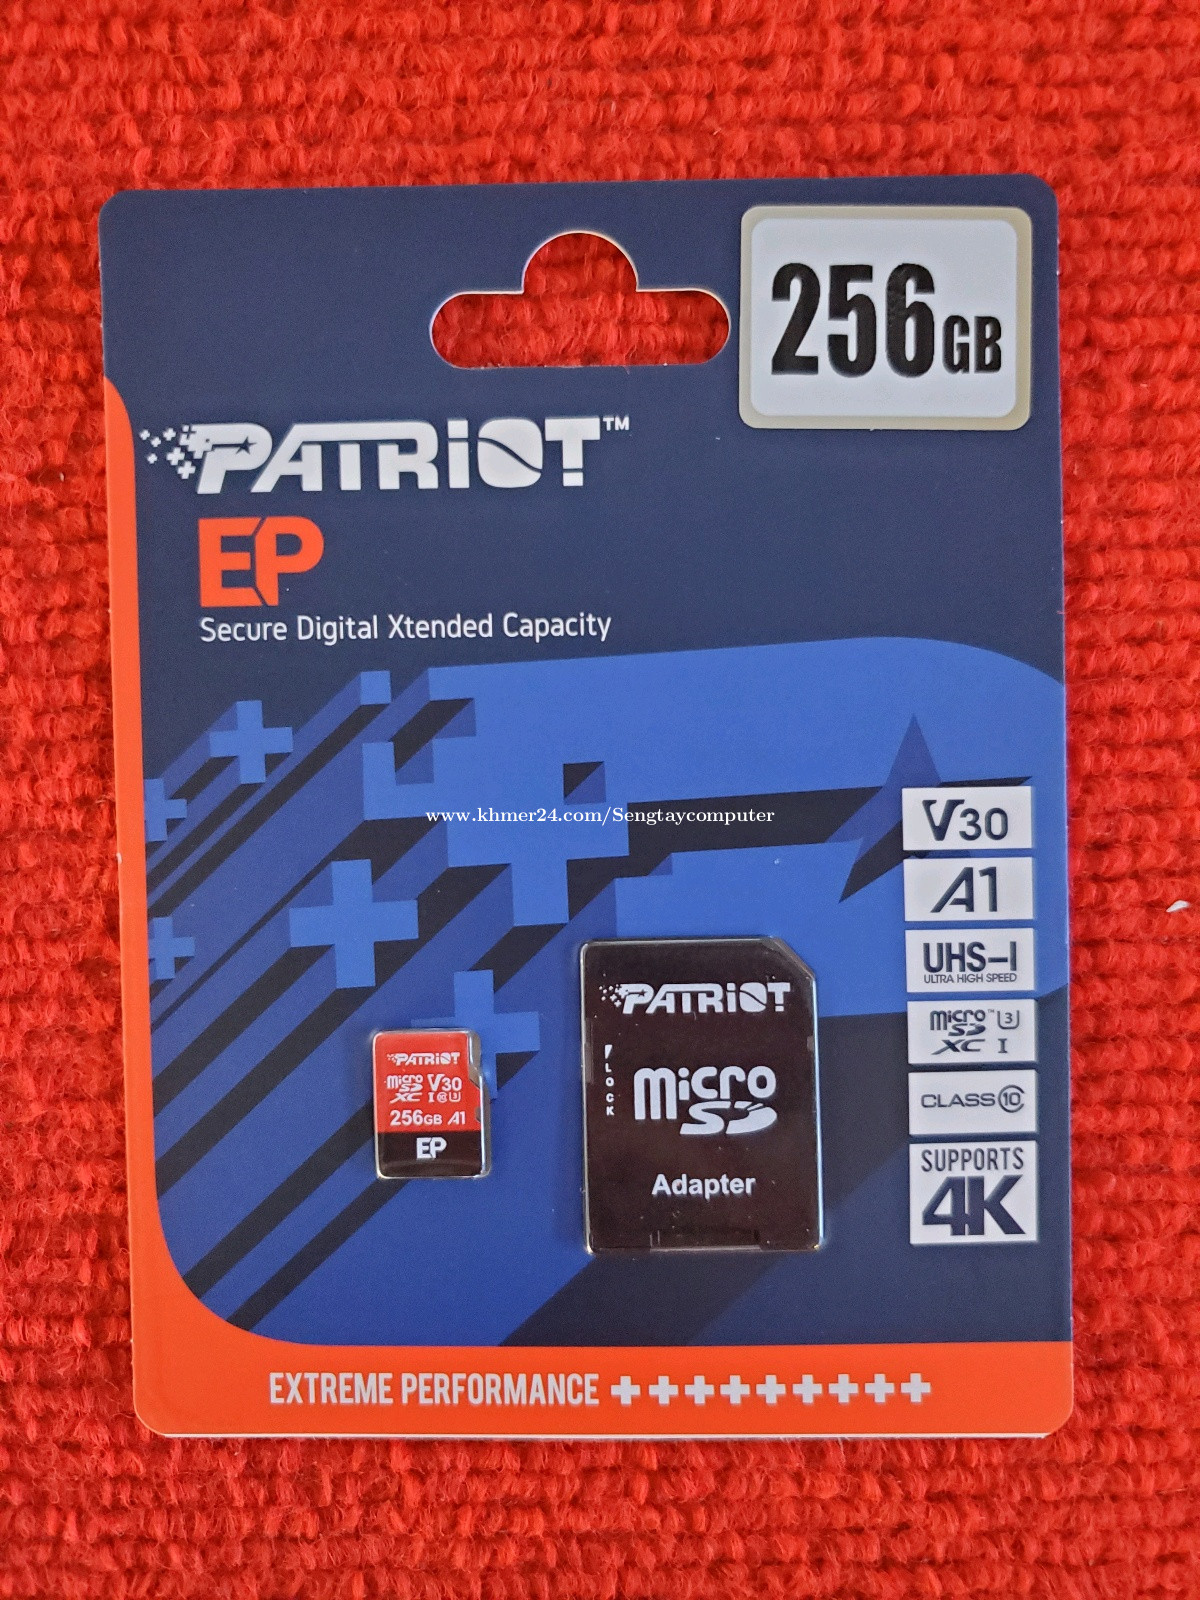 Micro SD Card Brand Patriot price $12 in Phnom Penh, Cambodia - Seng Tay  Computer 